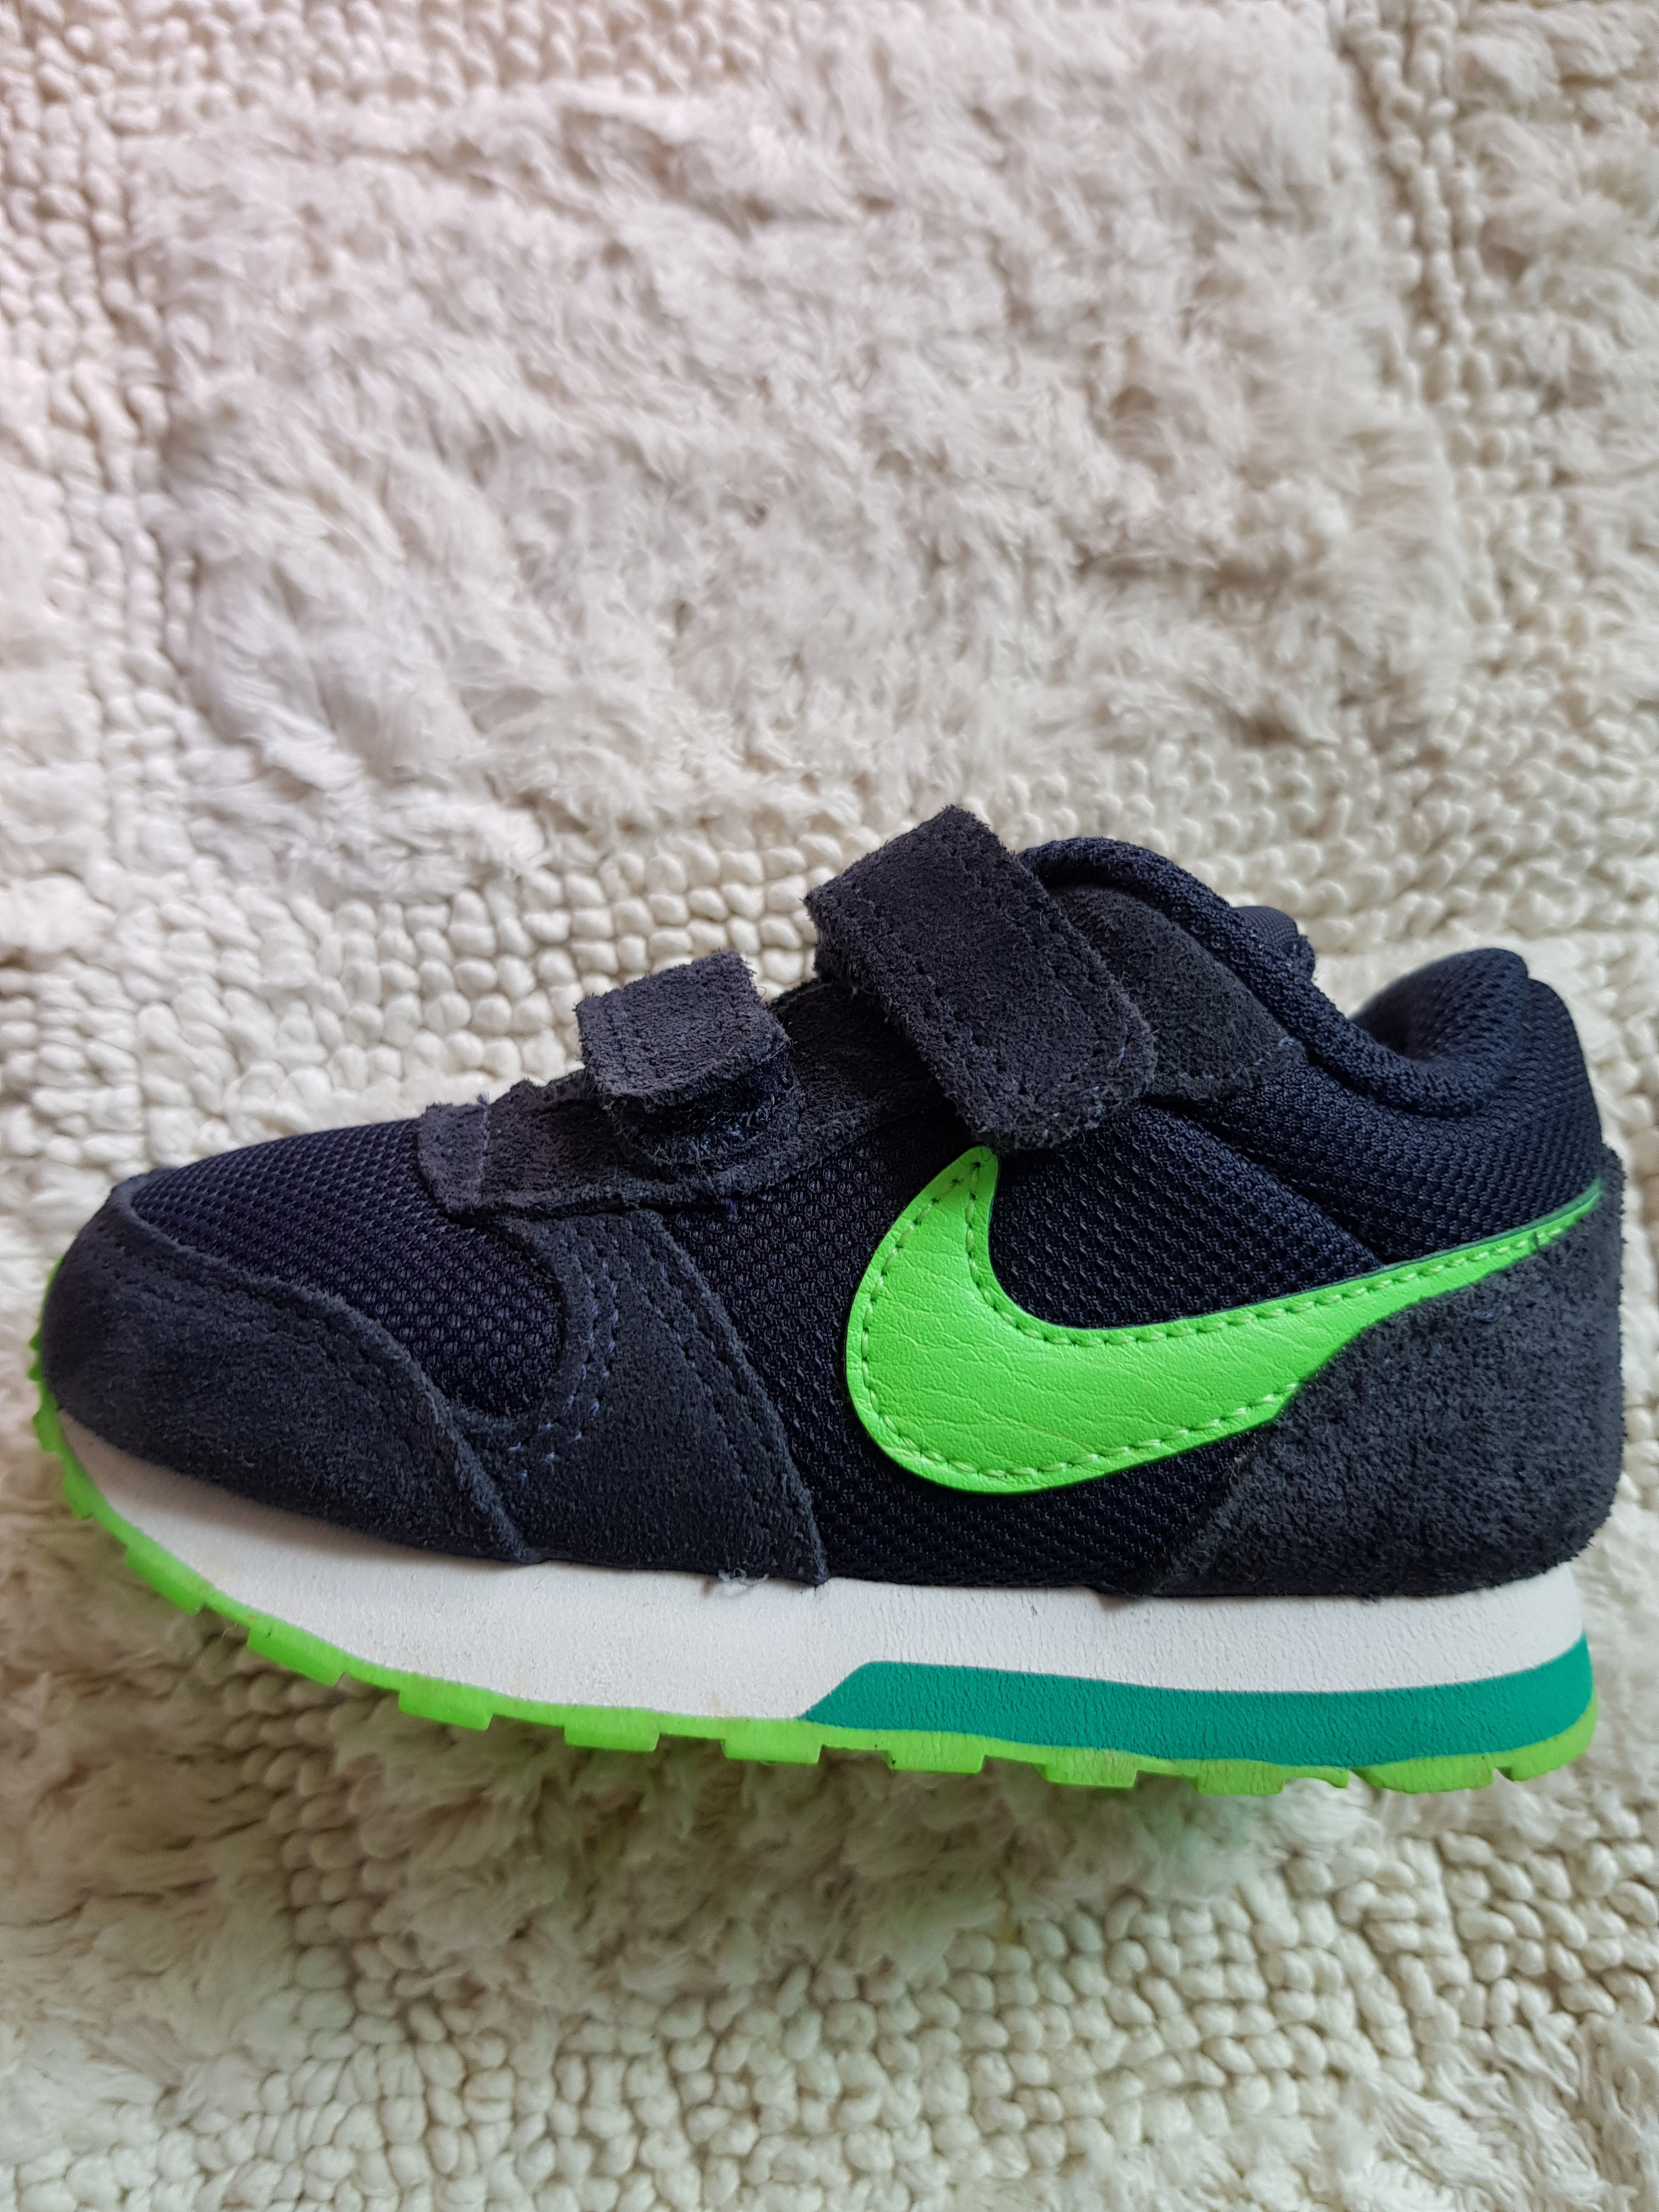 Like New* Nike Toddler Boy Shoes 